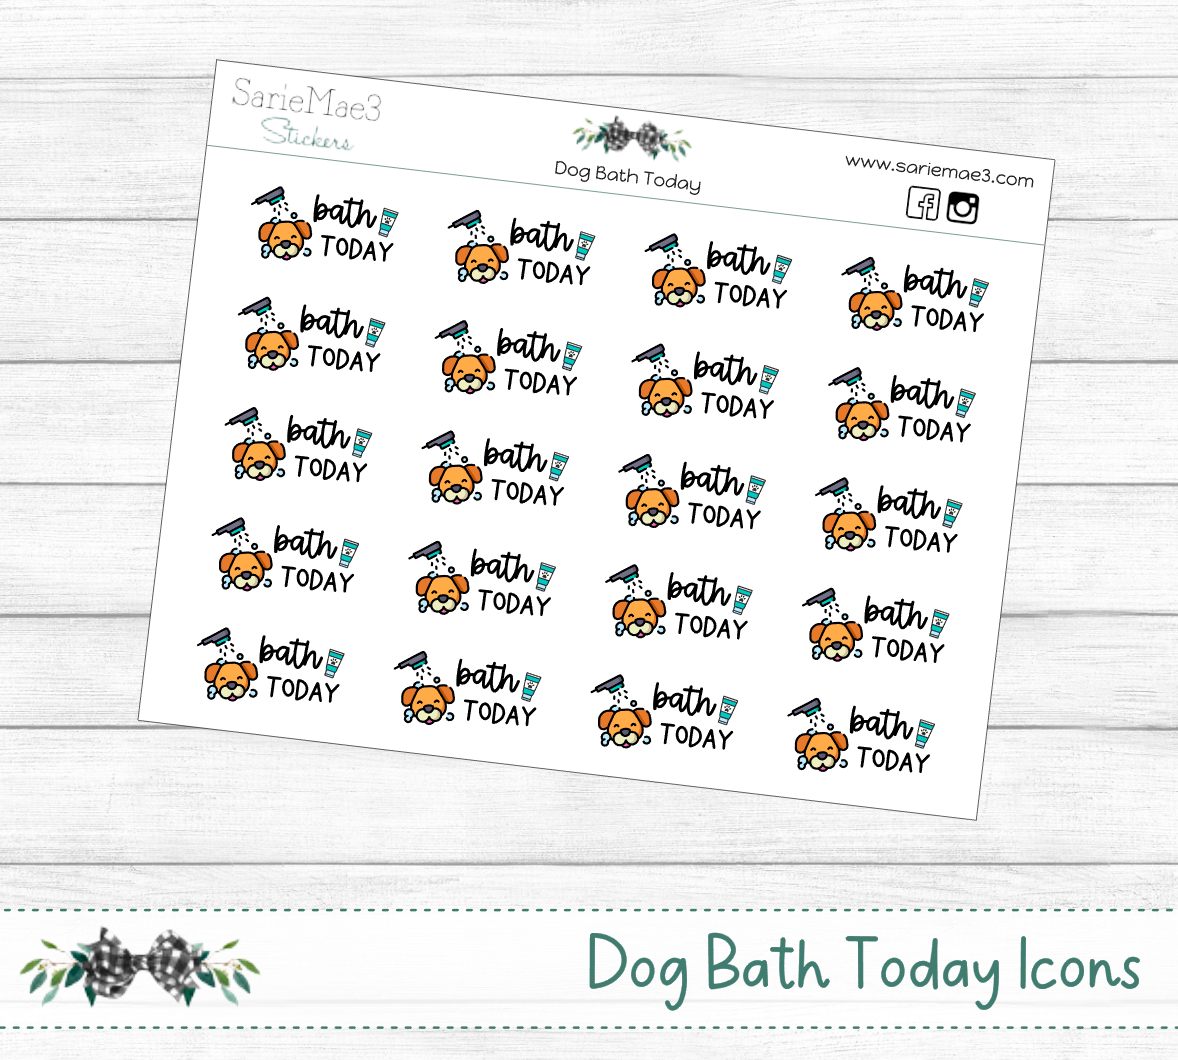 Dog Bath Today Icons